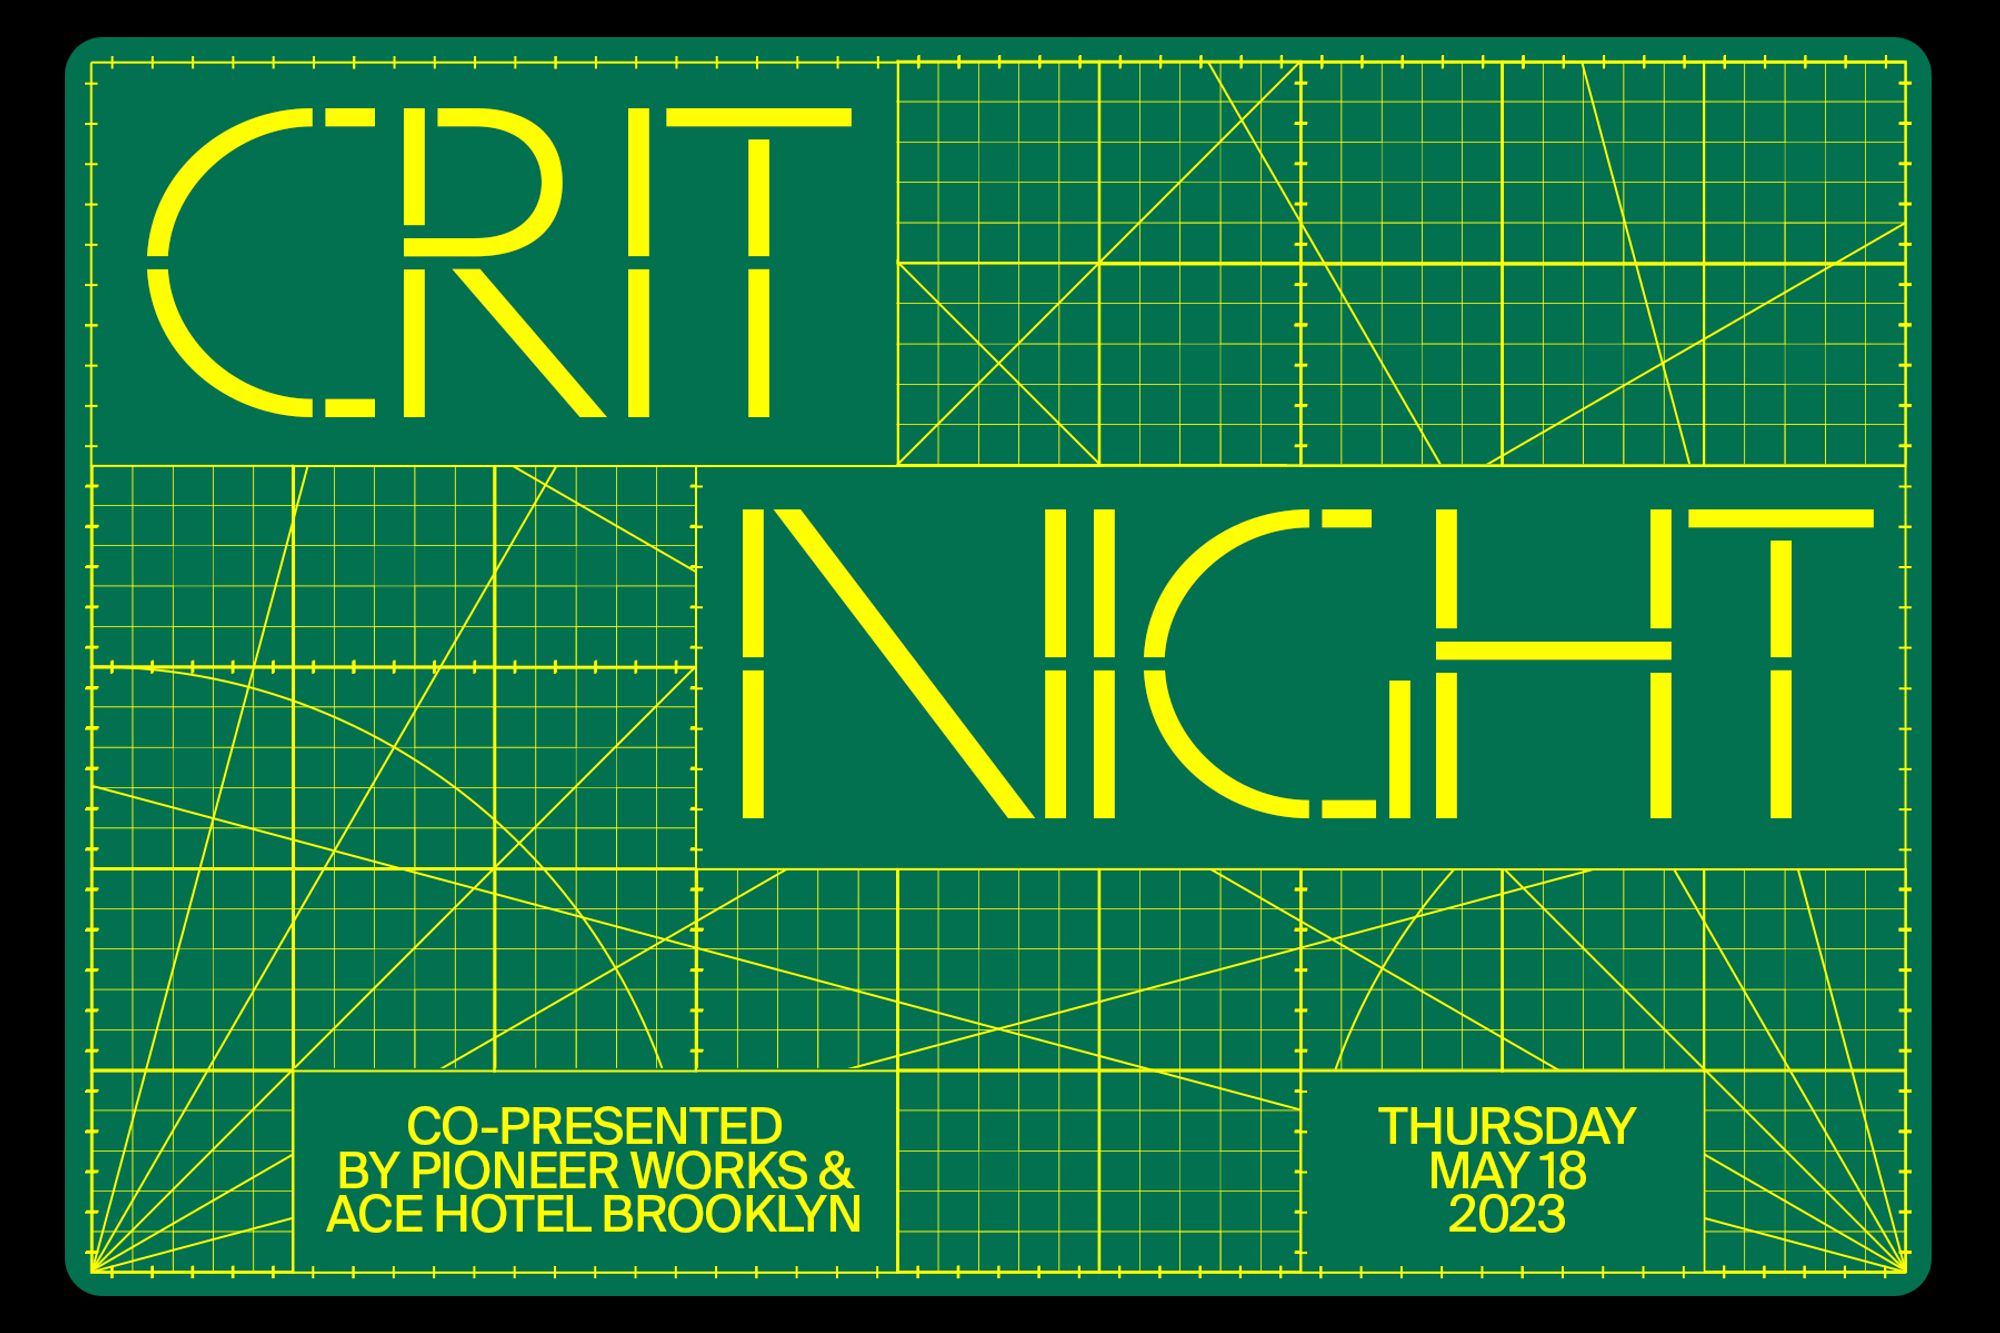 Crit Night at Ace Hotel Brooklyn